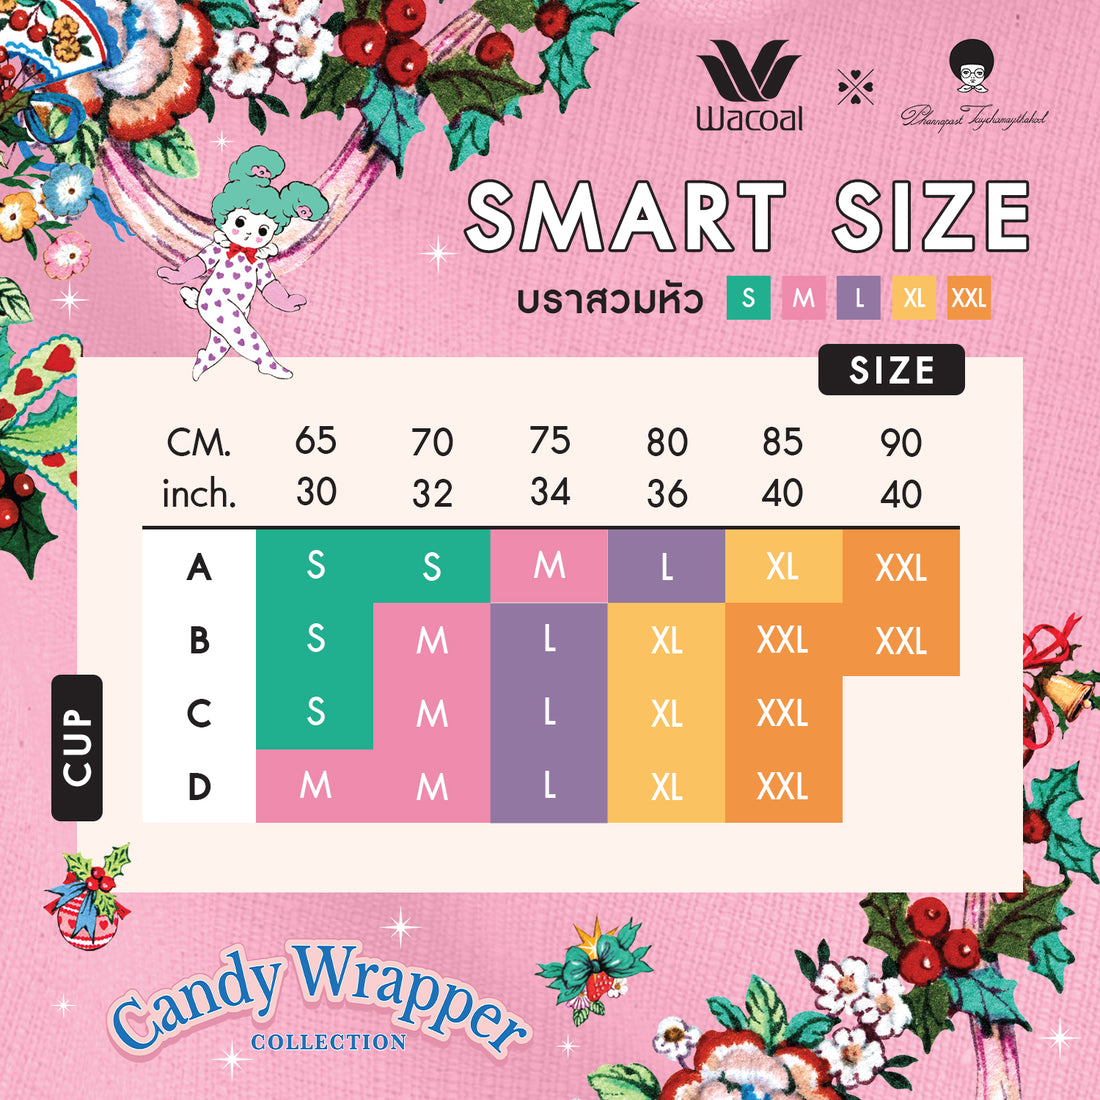 Wacoal x Phannapast: “Candy Wrappers Collection”  บังทรงสวมหัวพิมพ์ลาย Ranibow Sue รุ่น WH4N06  สีแดง (RE)